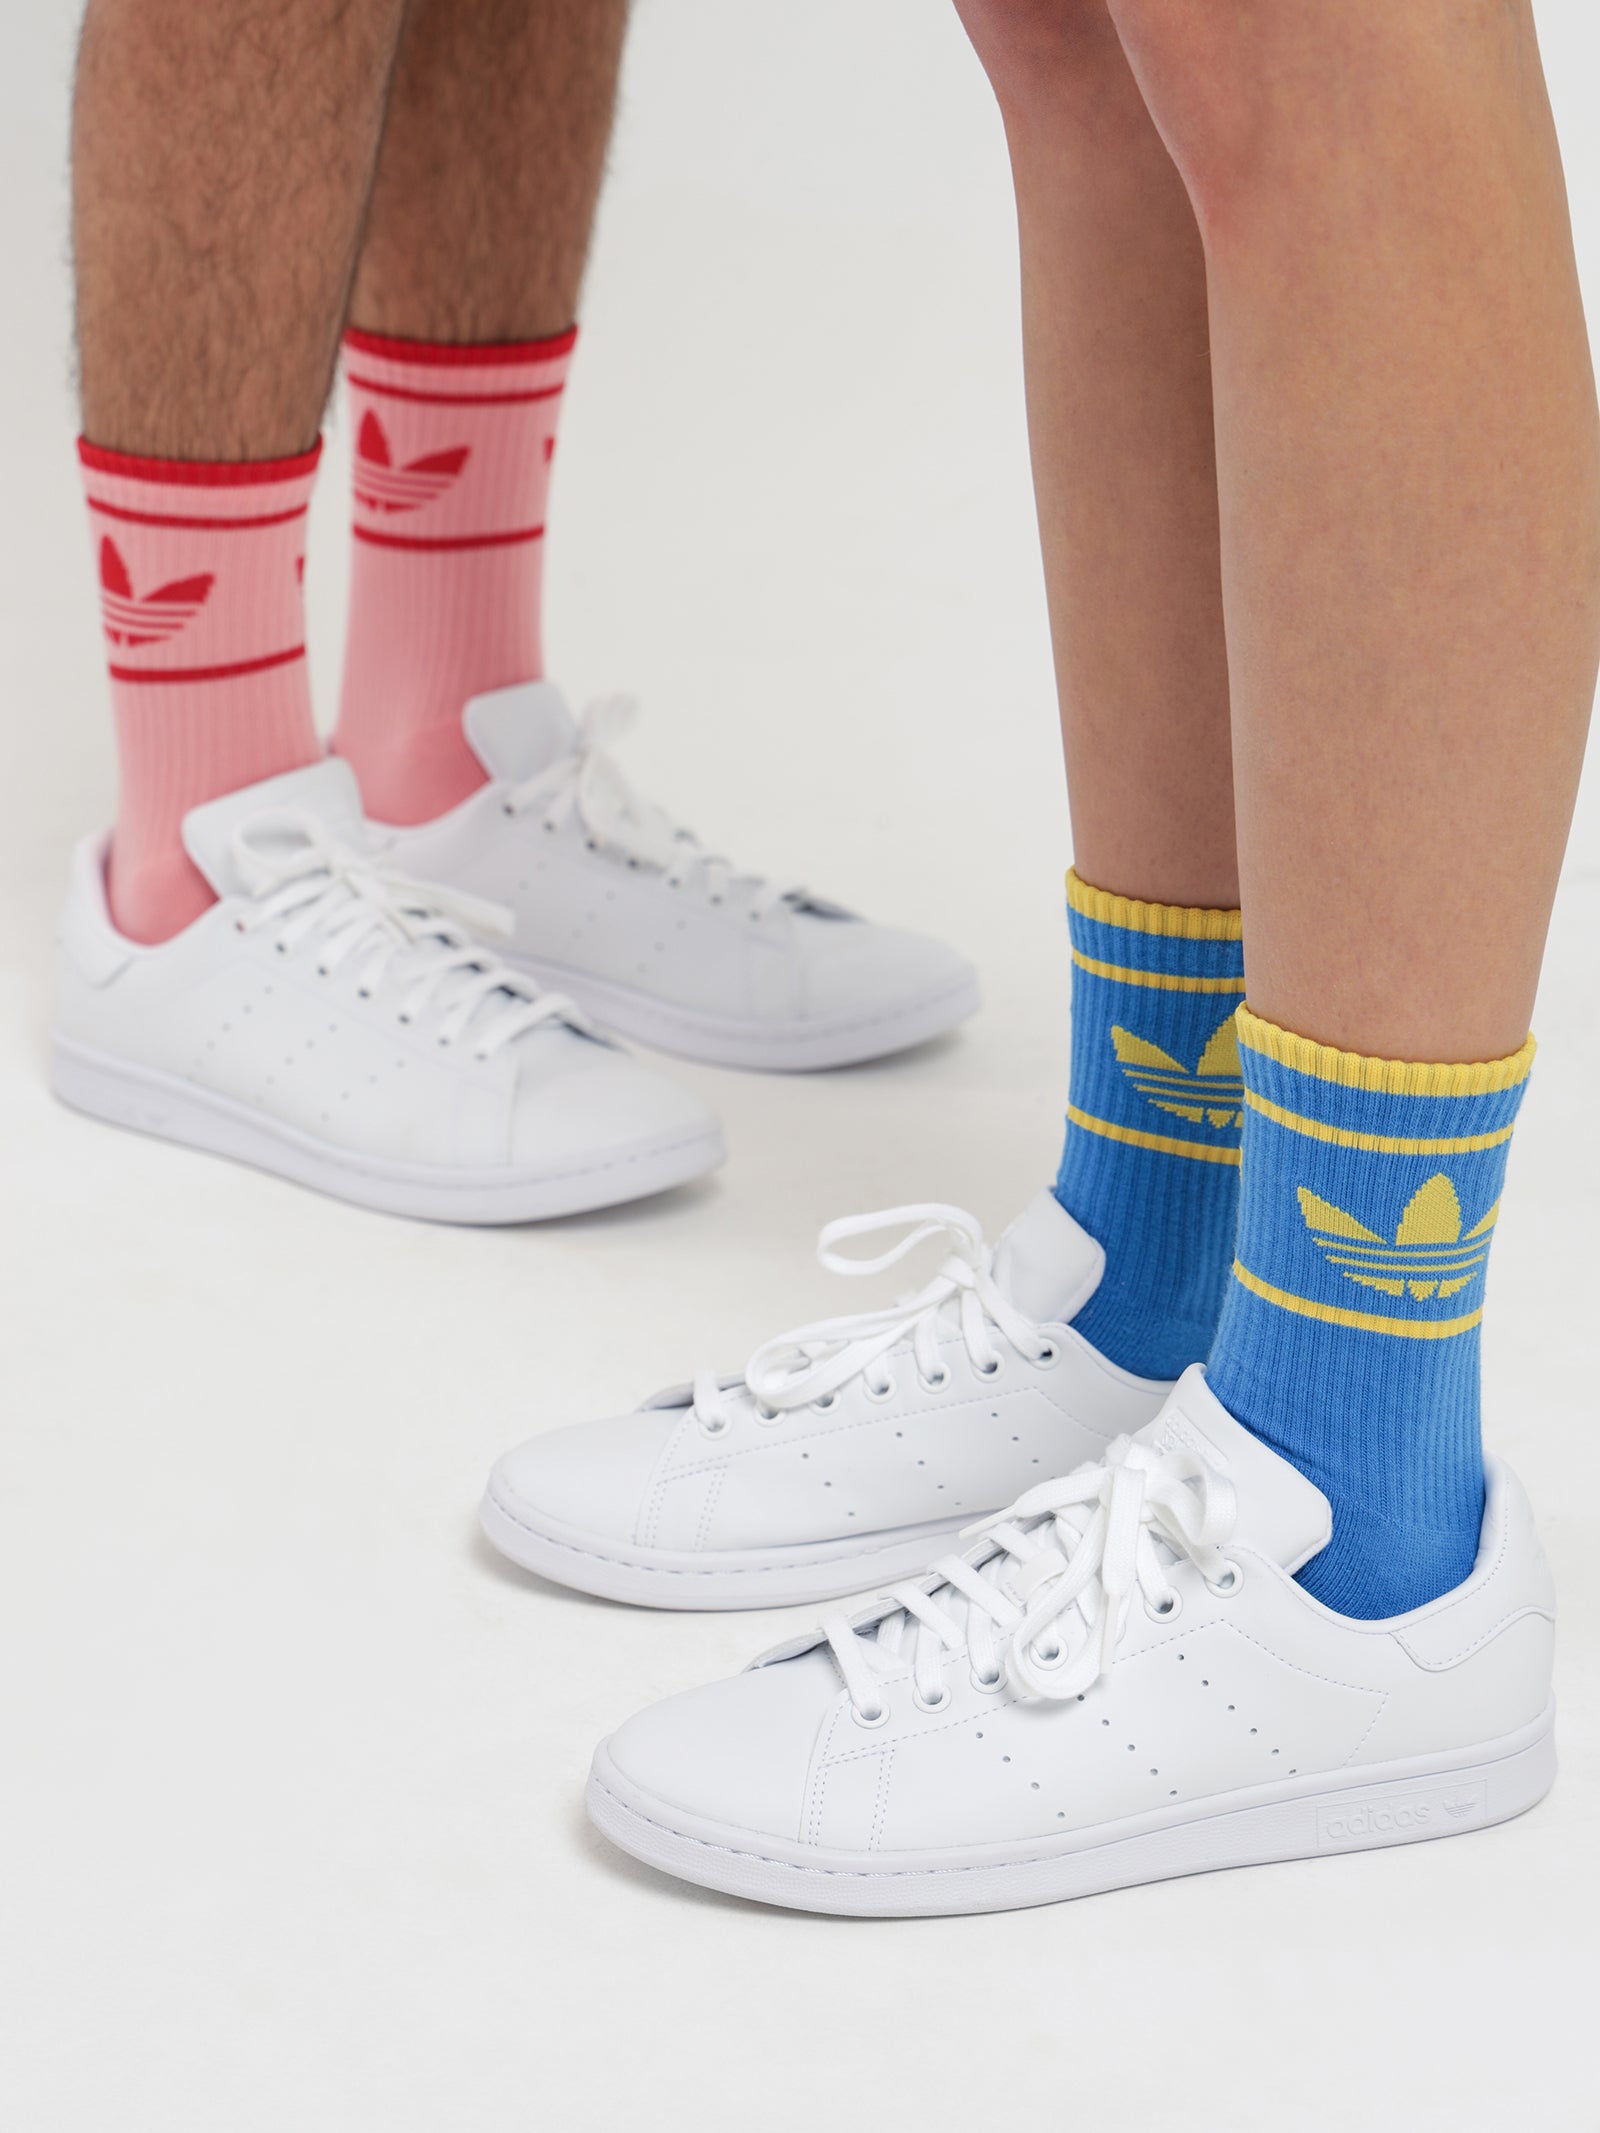 Two Pairs of ADICOLOR 70s Crew Socks in Superpop Pink & Bluebird Blue